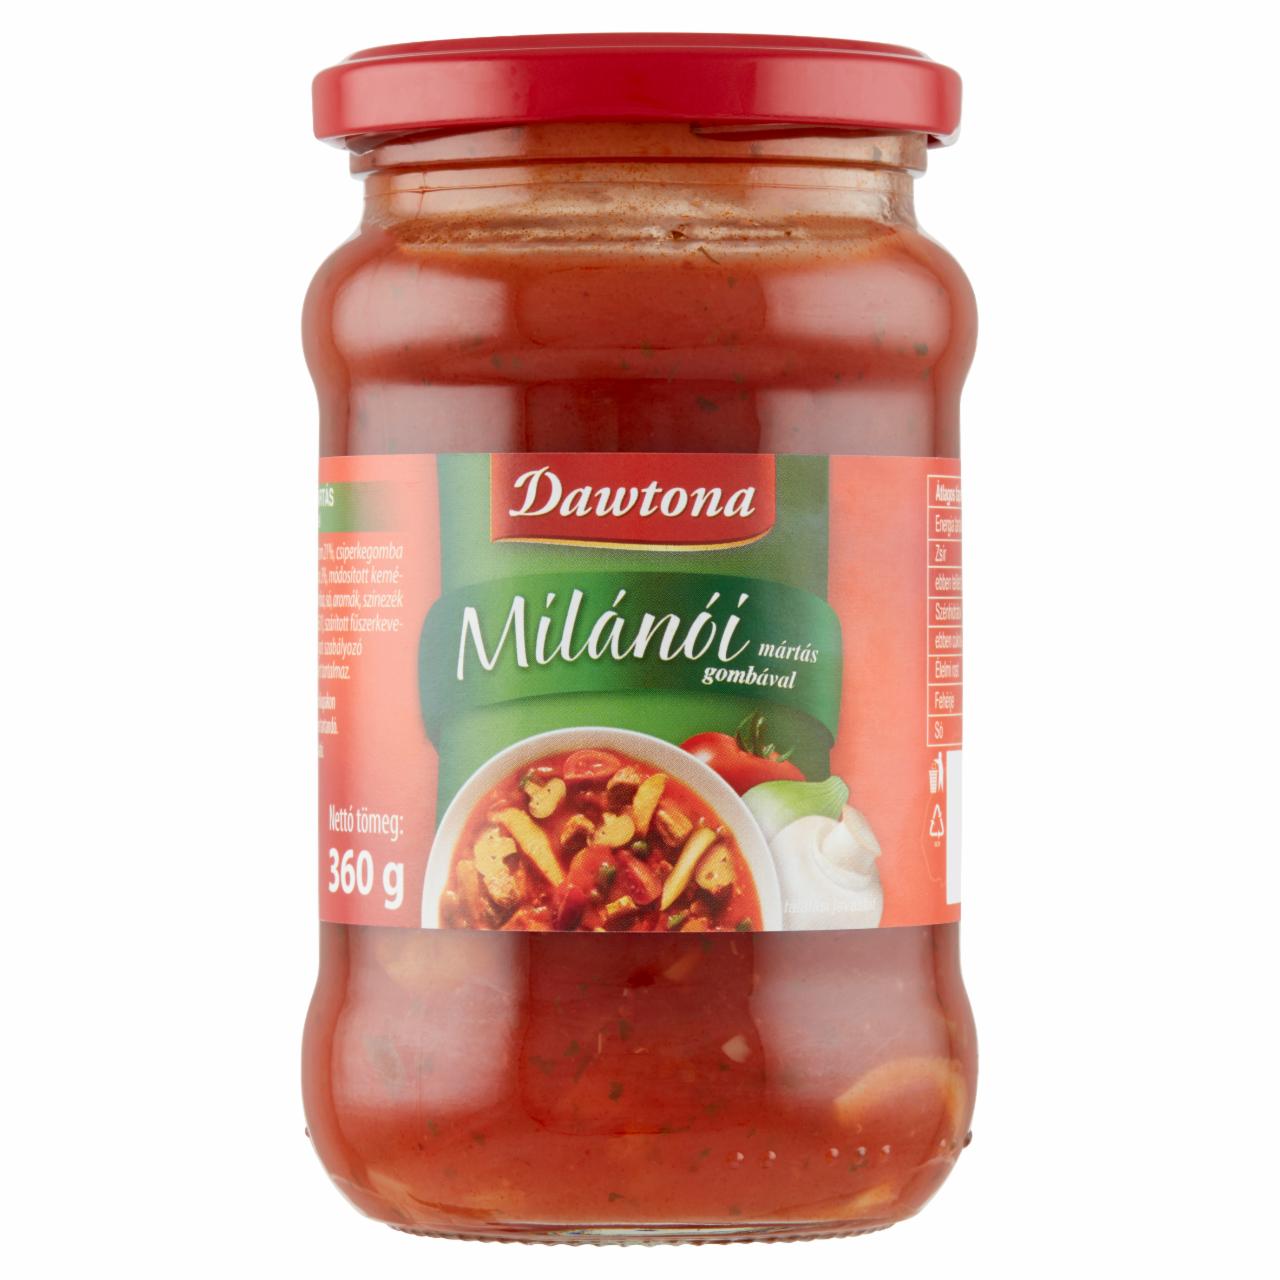 Photo - Dawtona Milanese Sauce with Mushroom 360 g